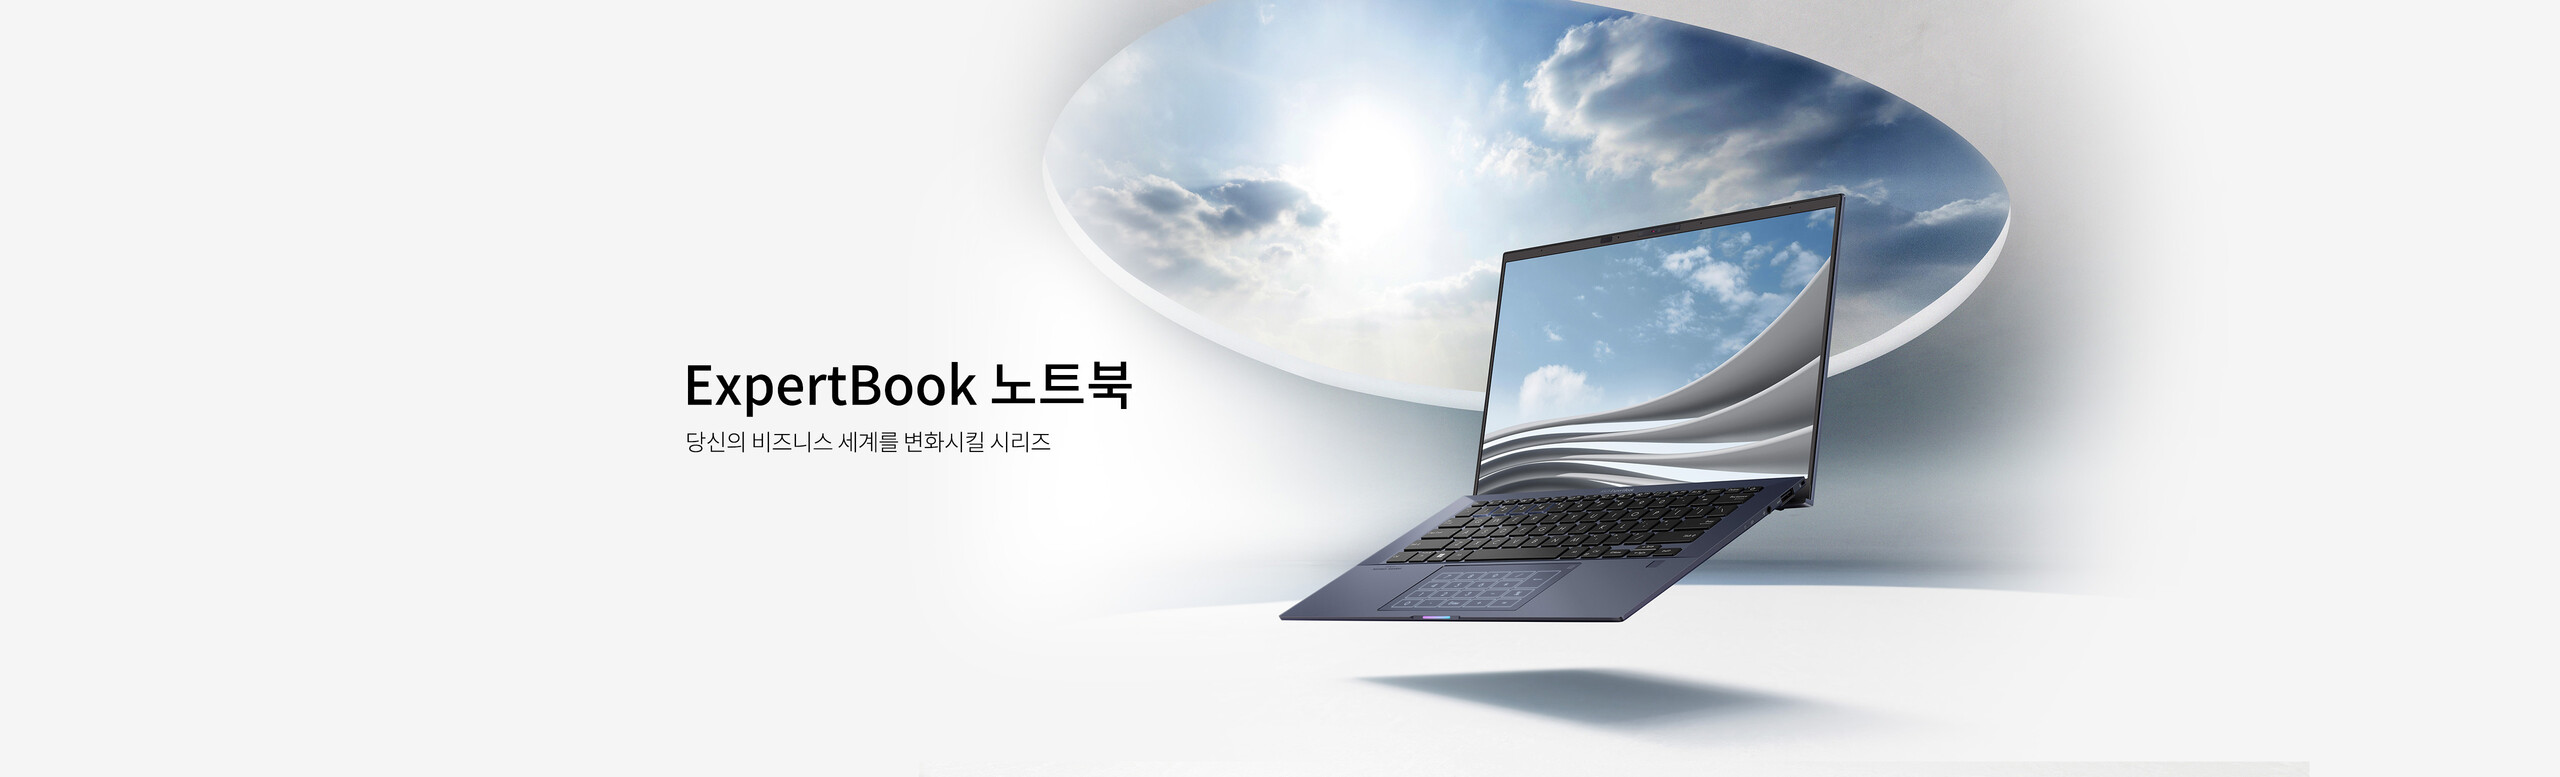 ExpertBook Laptops